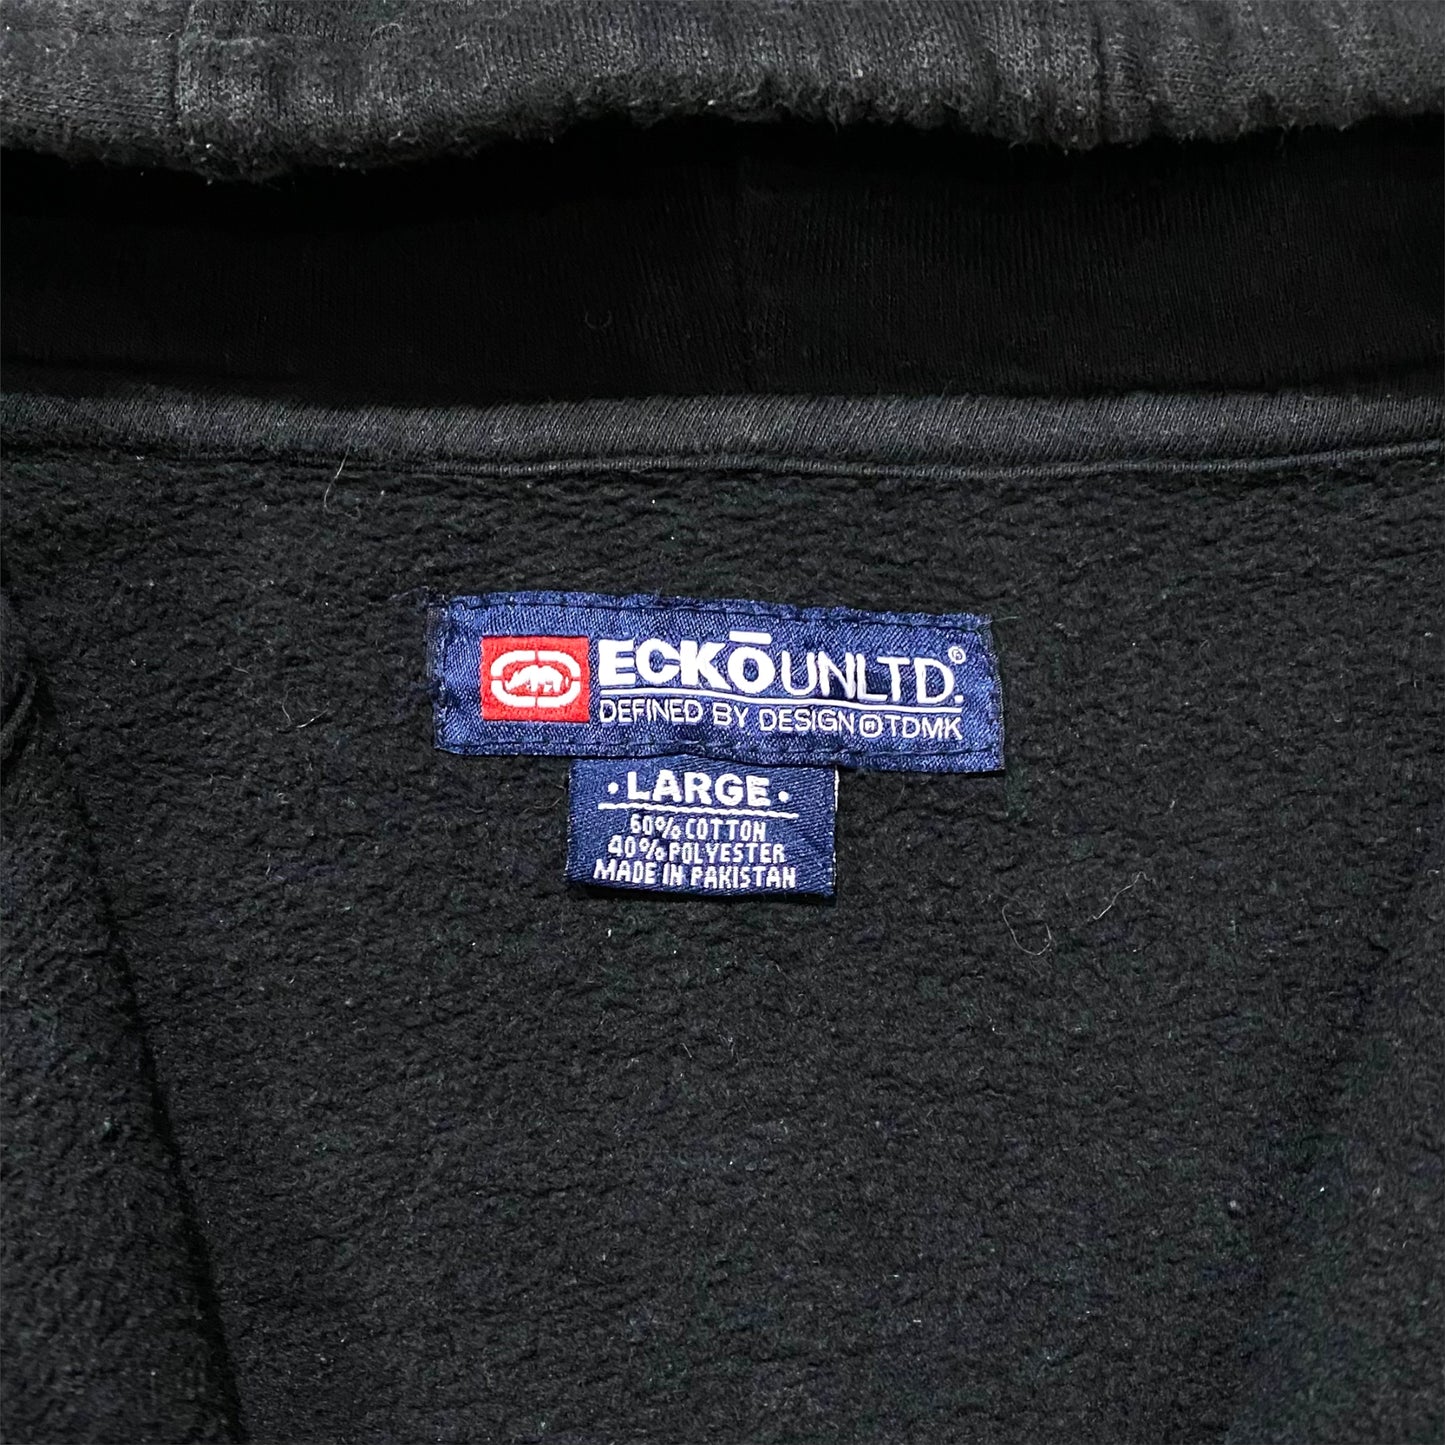 "ECKO UNLMTD" Logo design hoodie